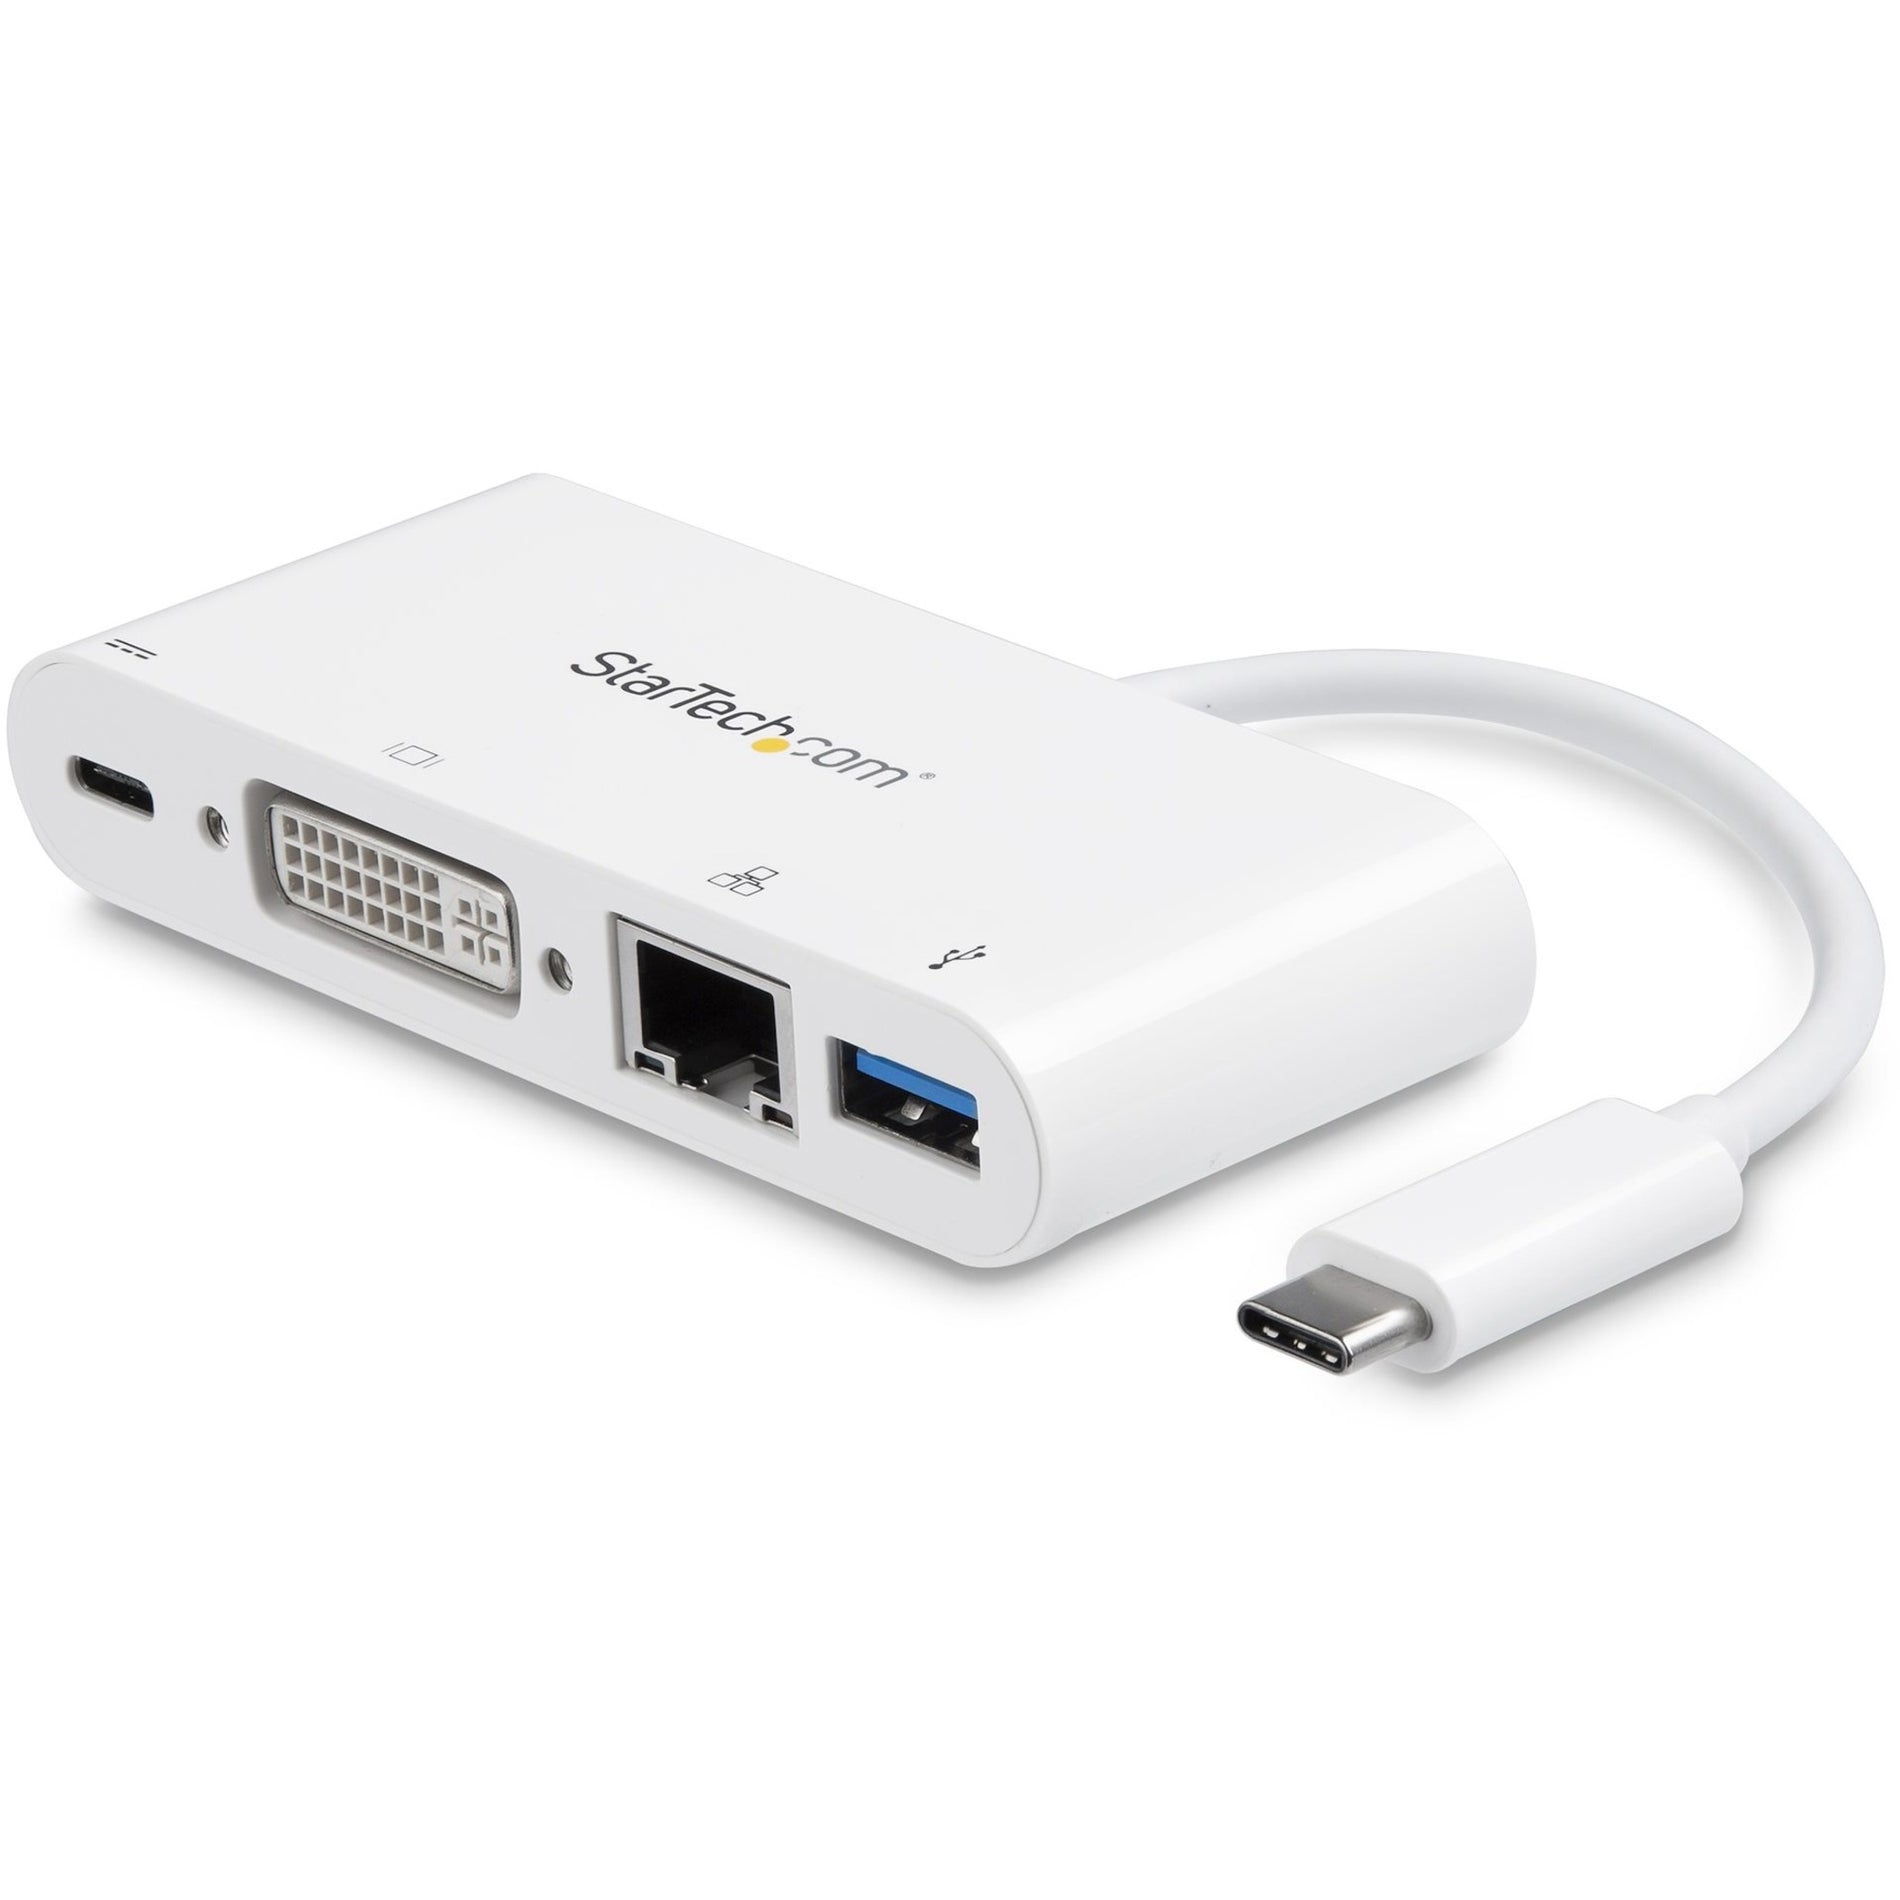 StarTech.com DKT30CDVPD USB-C Multiport Adapter - Power Delivery, DVI, Gigabit Ethernet, USB 3.0 Hub